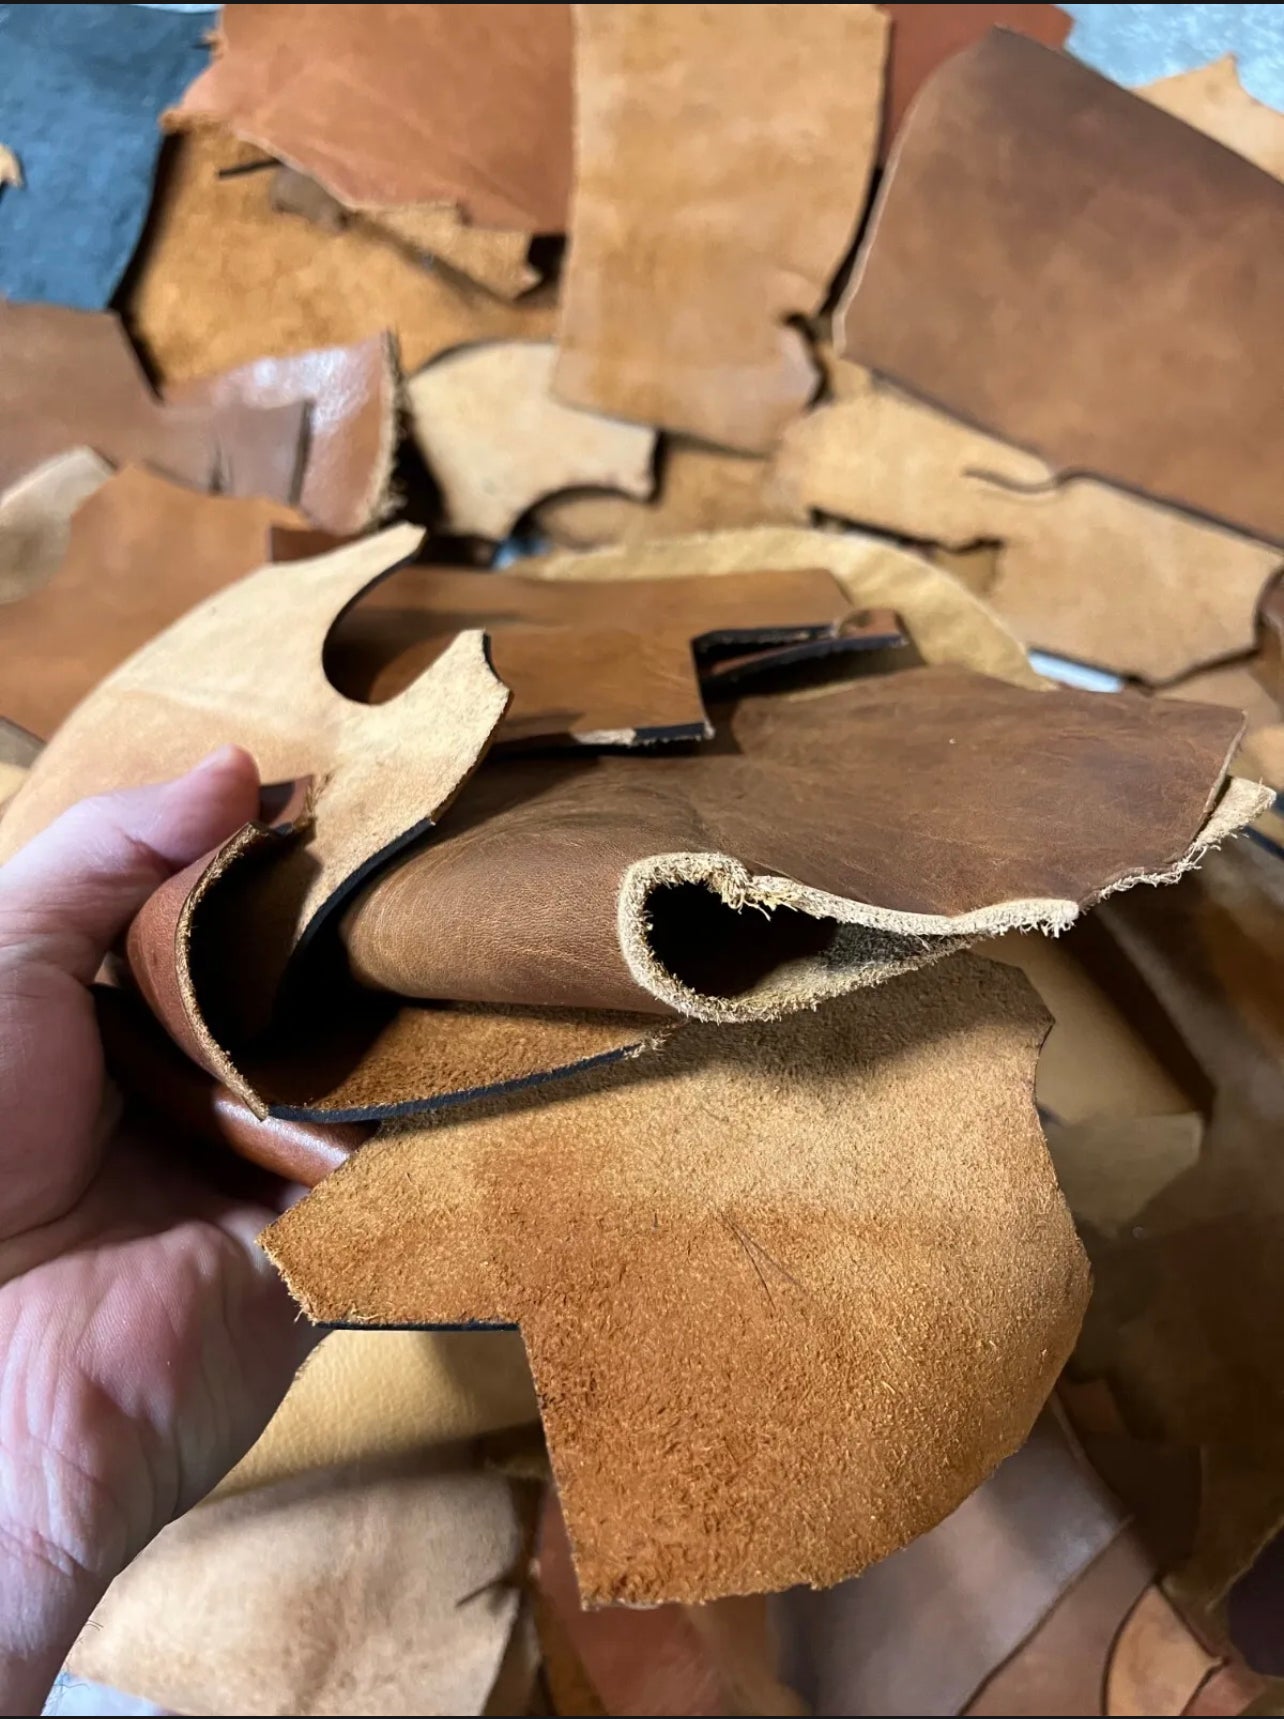 Lightweight 2 LBS Veg-Tan Leather Scraps, Remnants